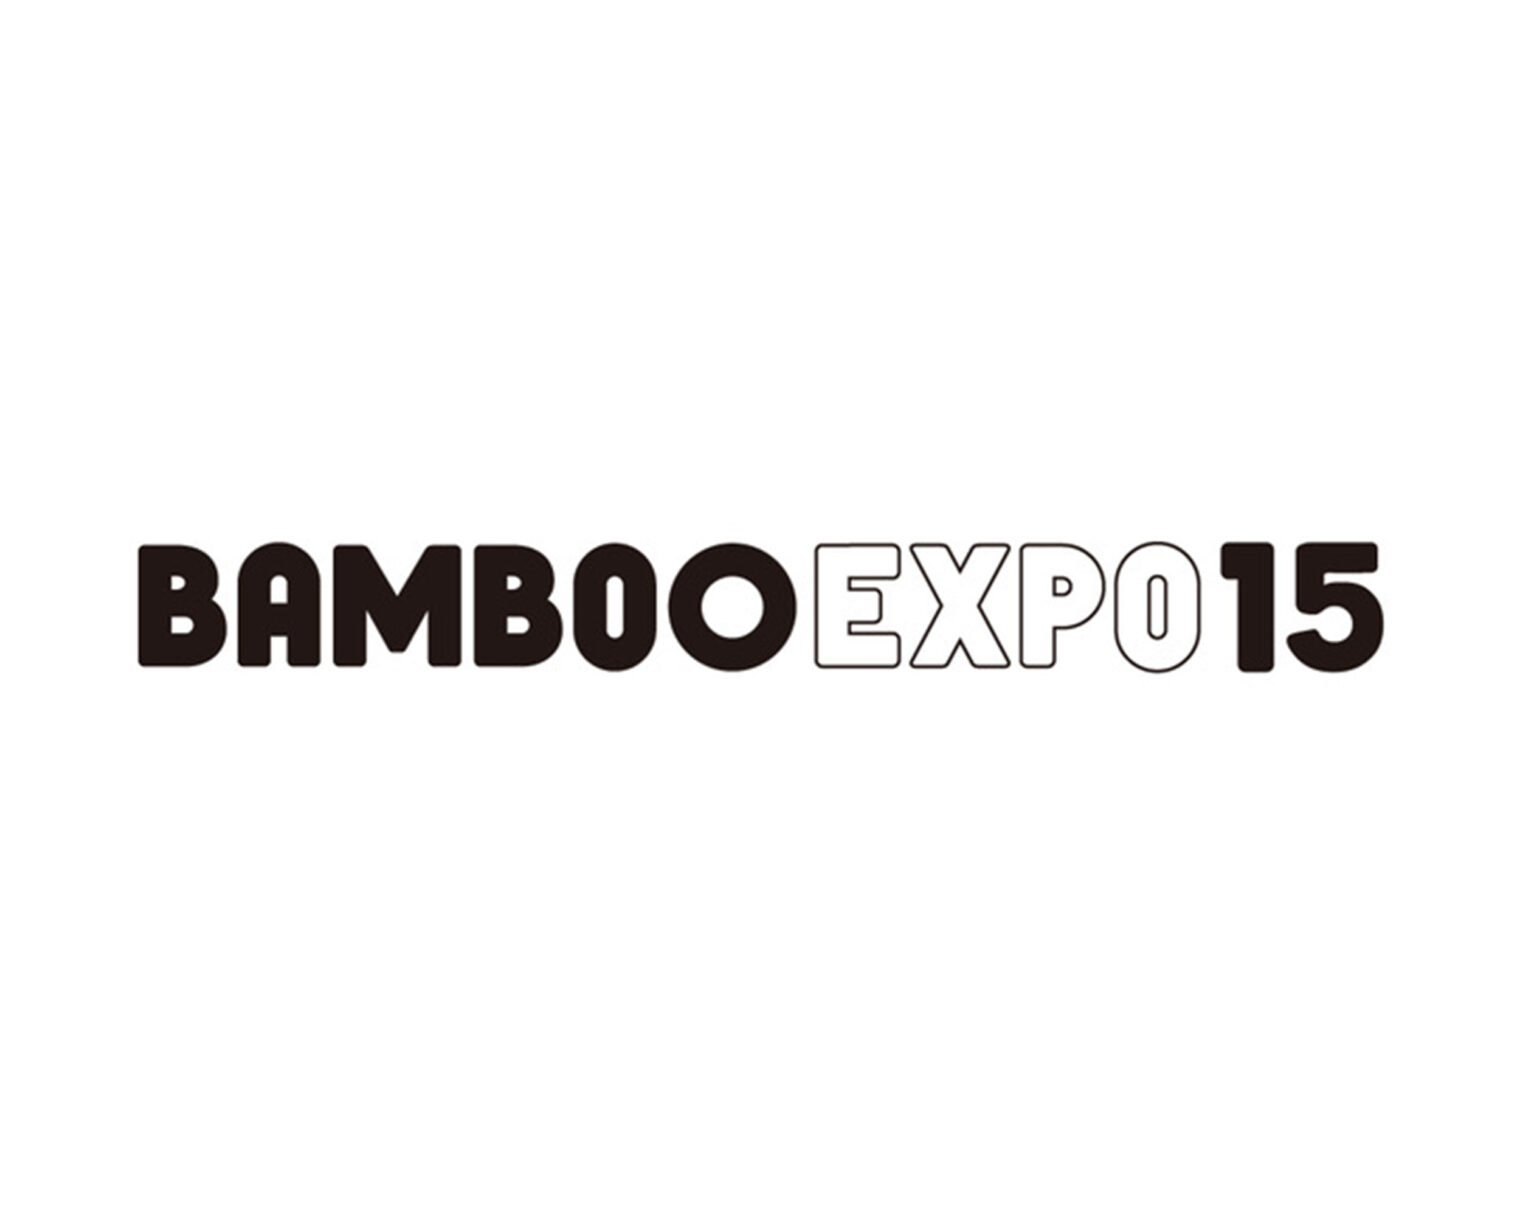 BAMBOO EXPO 15出展／BAMBOO EXPO ロゴ